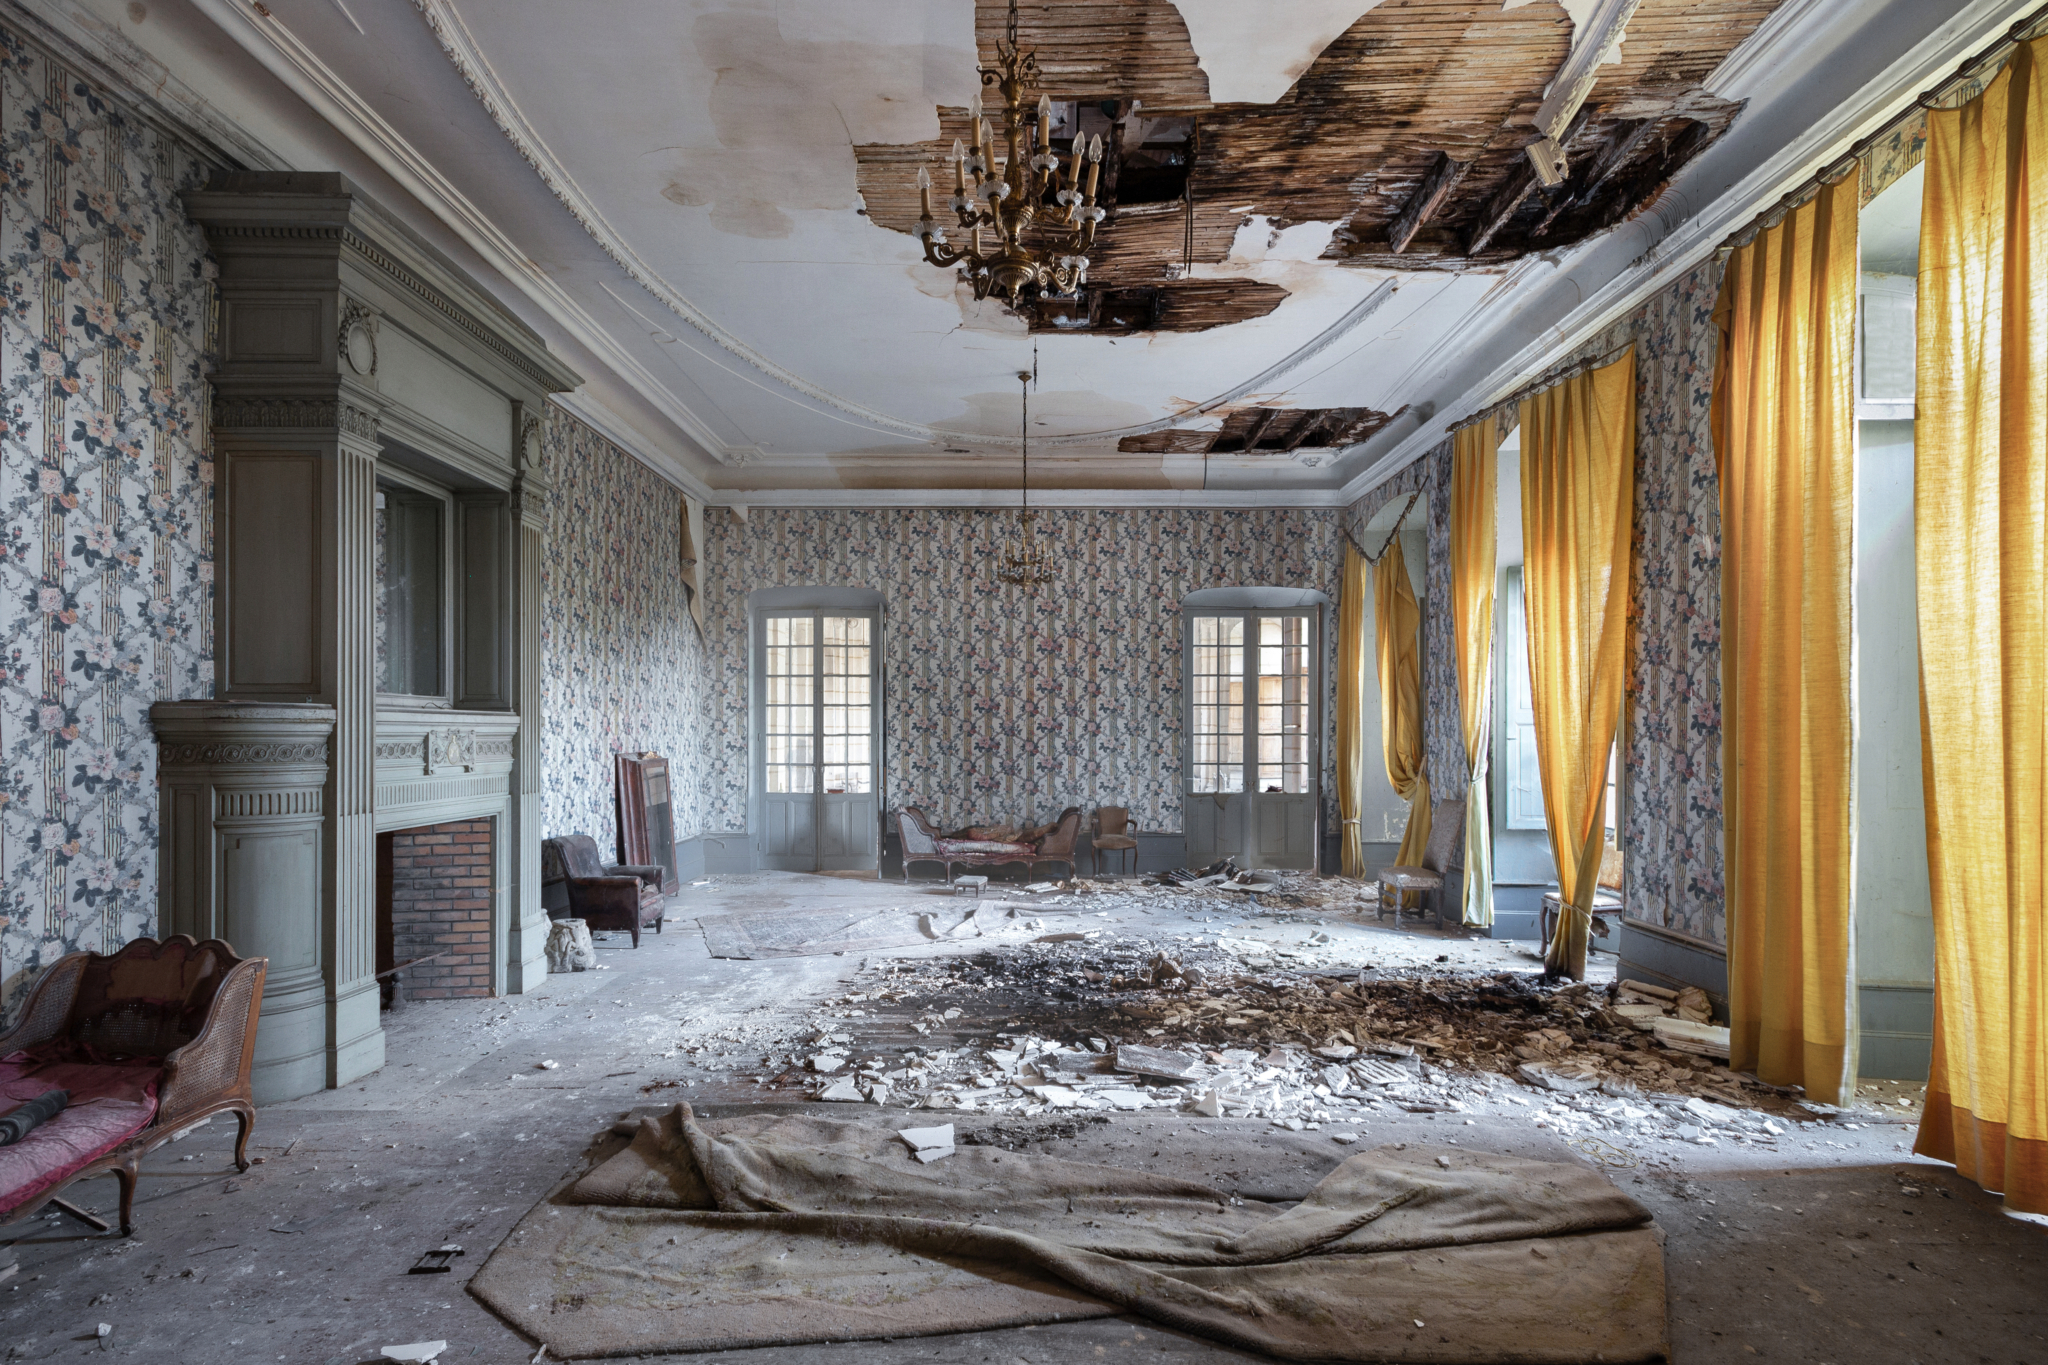 Dawn of Sorrow - Abandoned ballroom inside a derelict castle, France